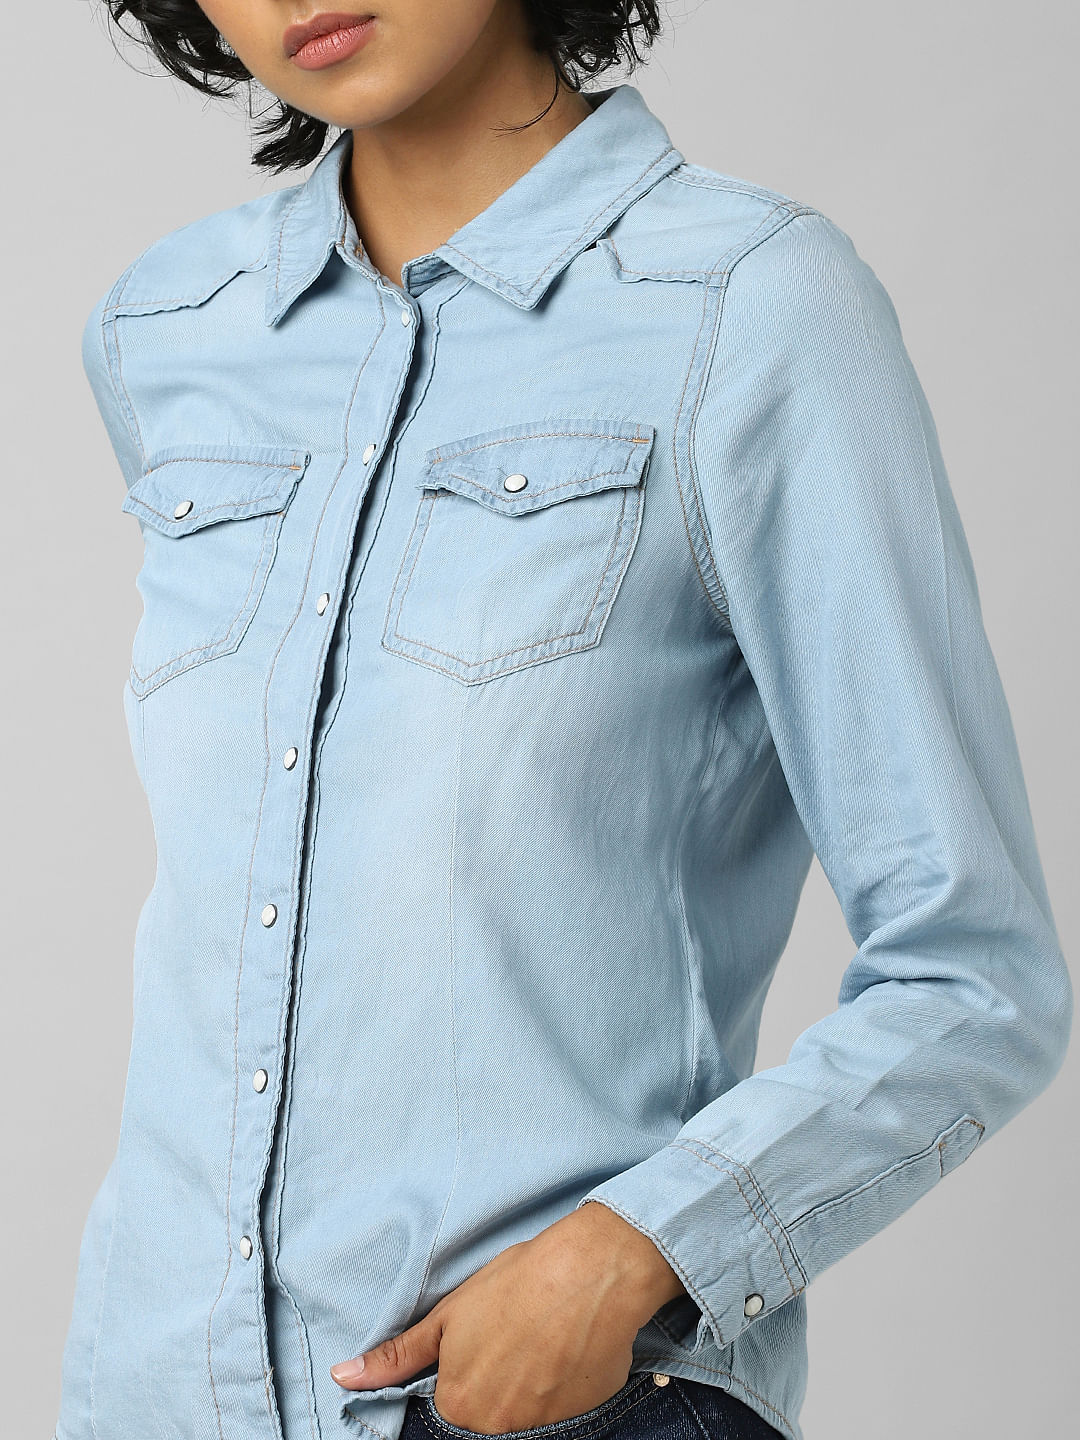 Kandy Women's Boxy Faded Casual Light Blue Denim Shirt (X-Large) :  Amazon.in: Fashion